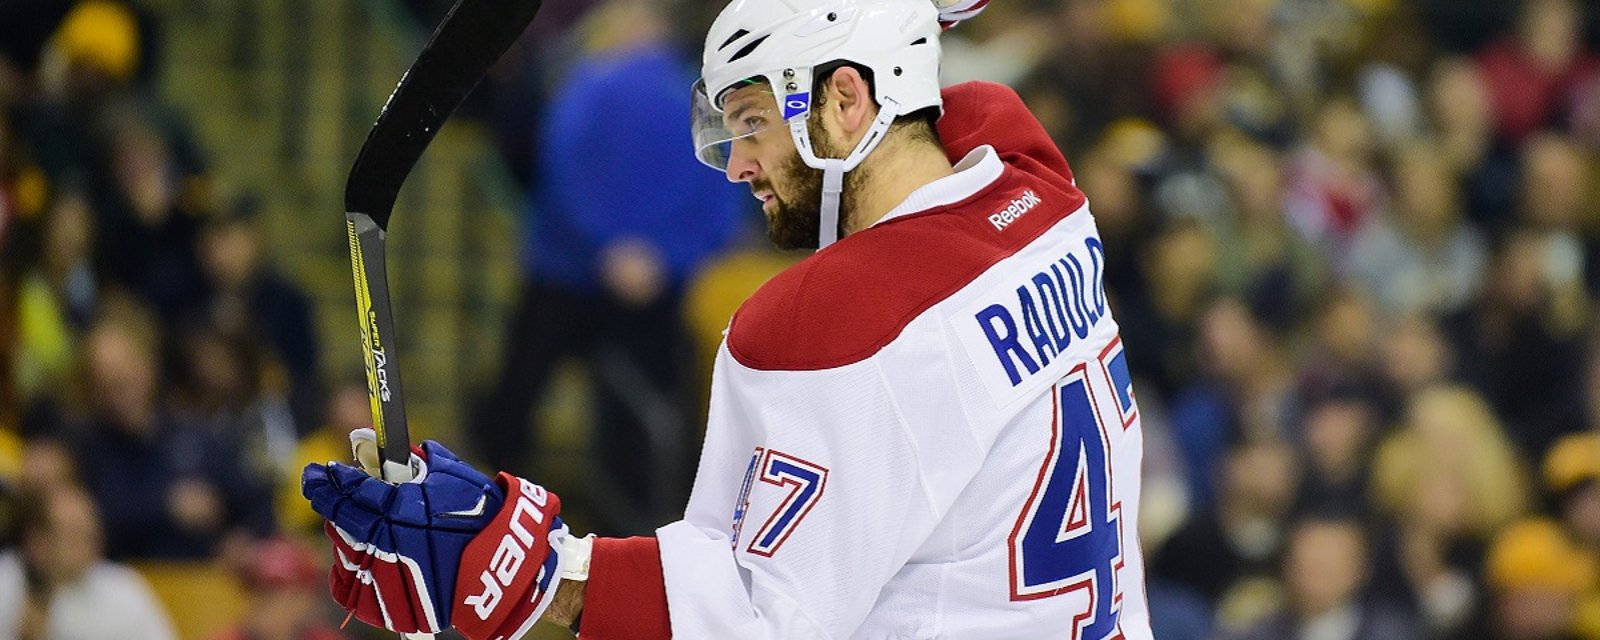 Breaking: Big rumors about Radulov leaking from the Canadiens organization.